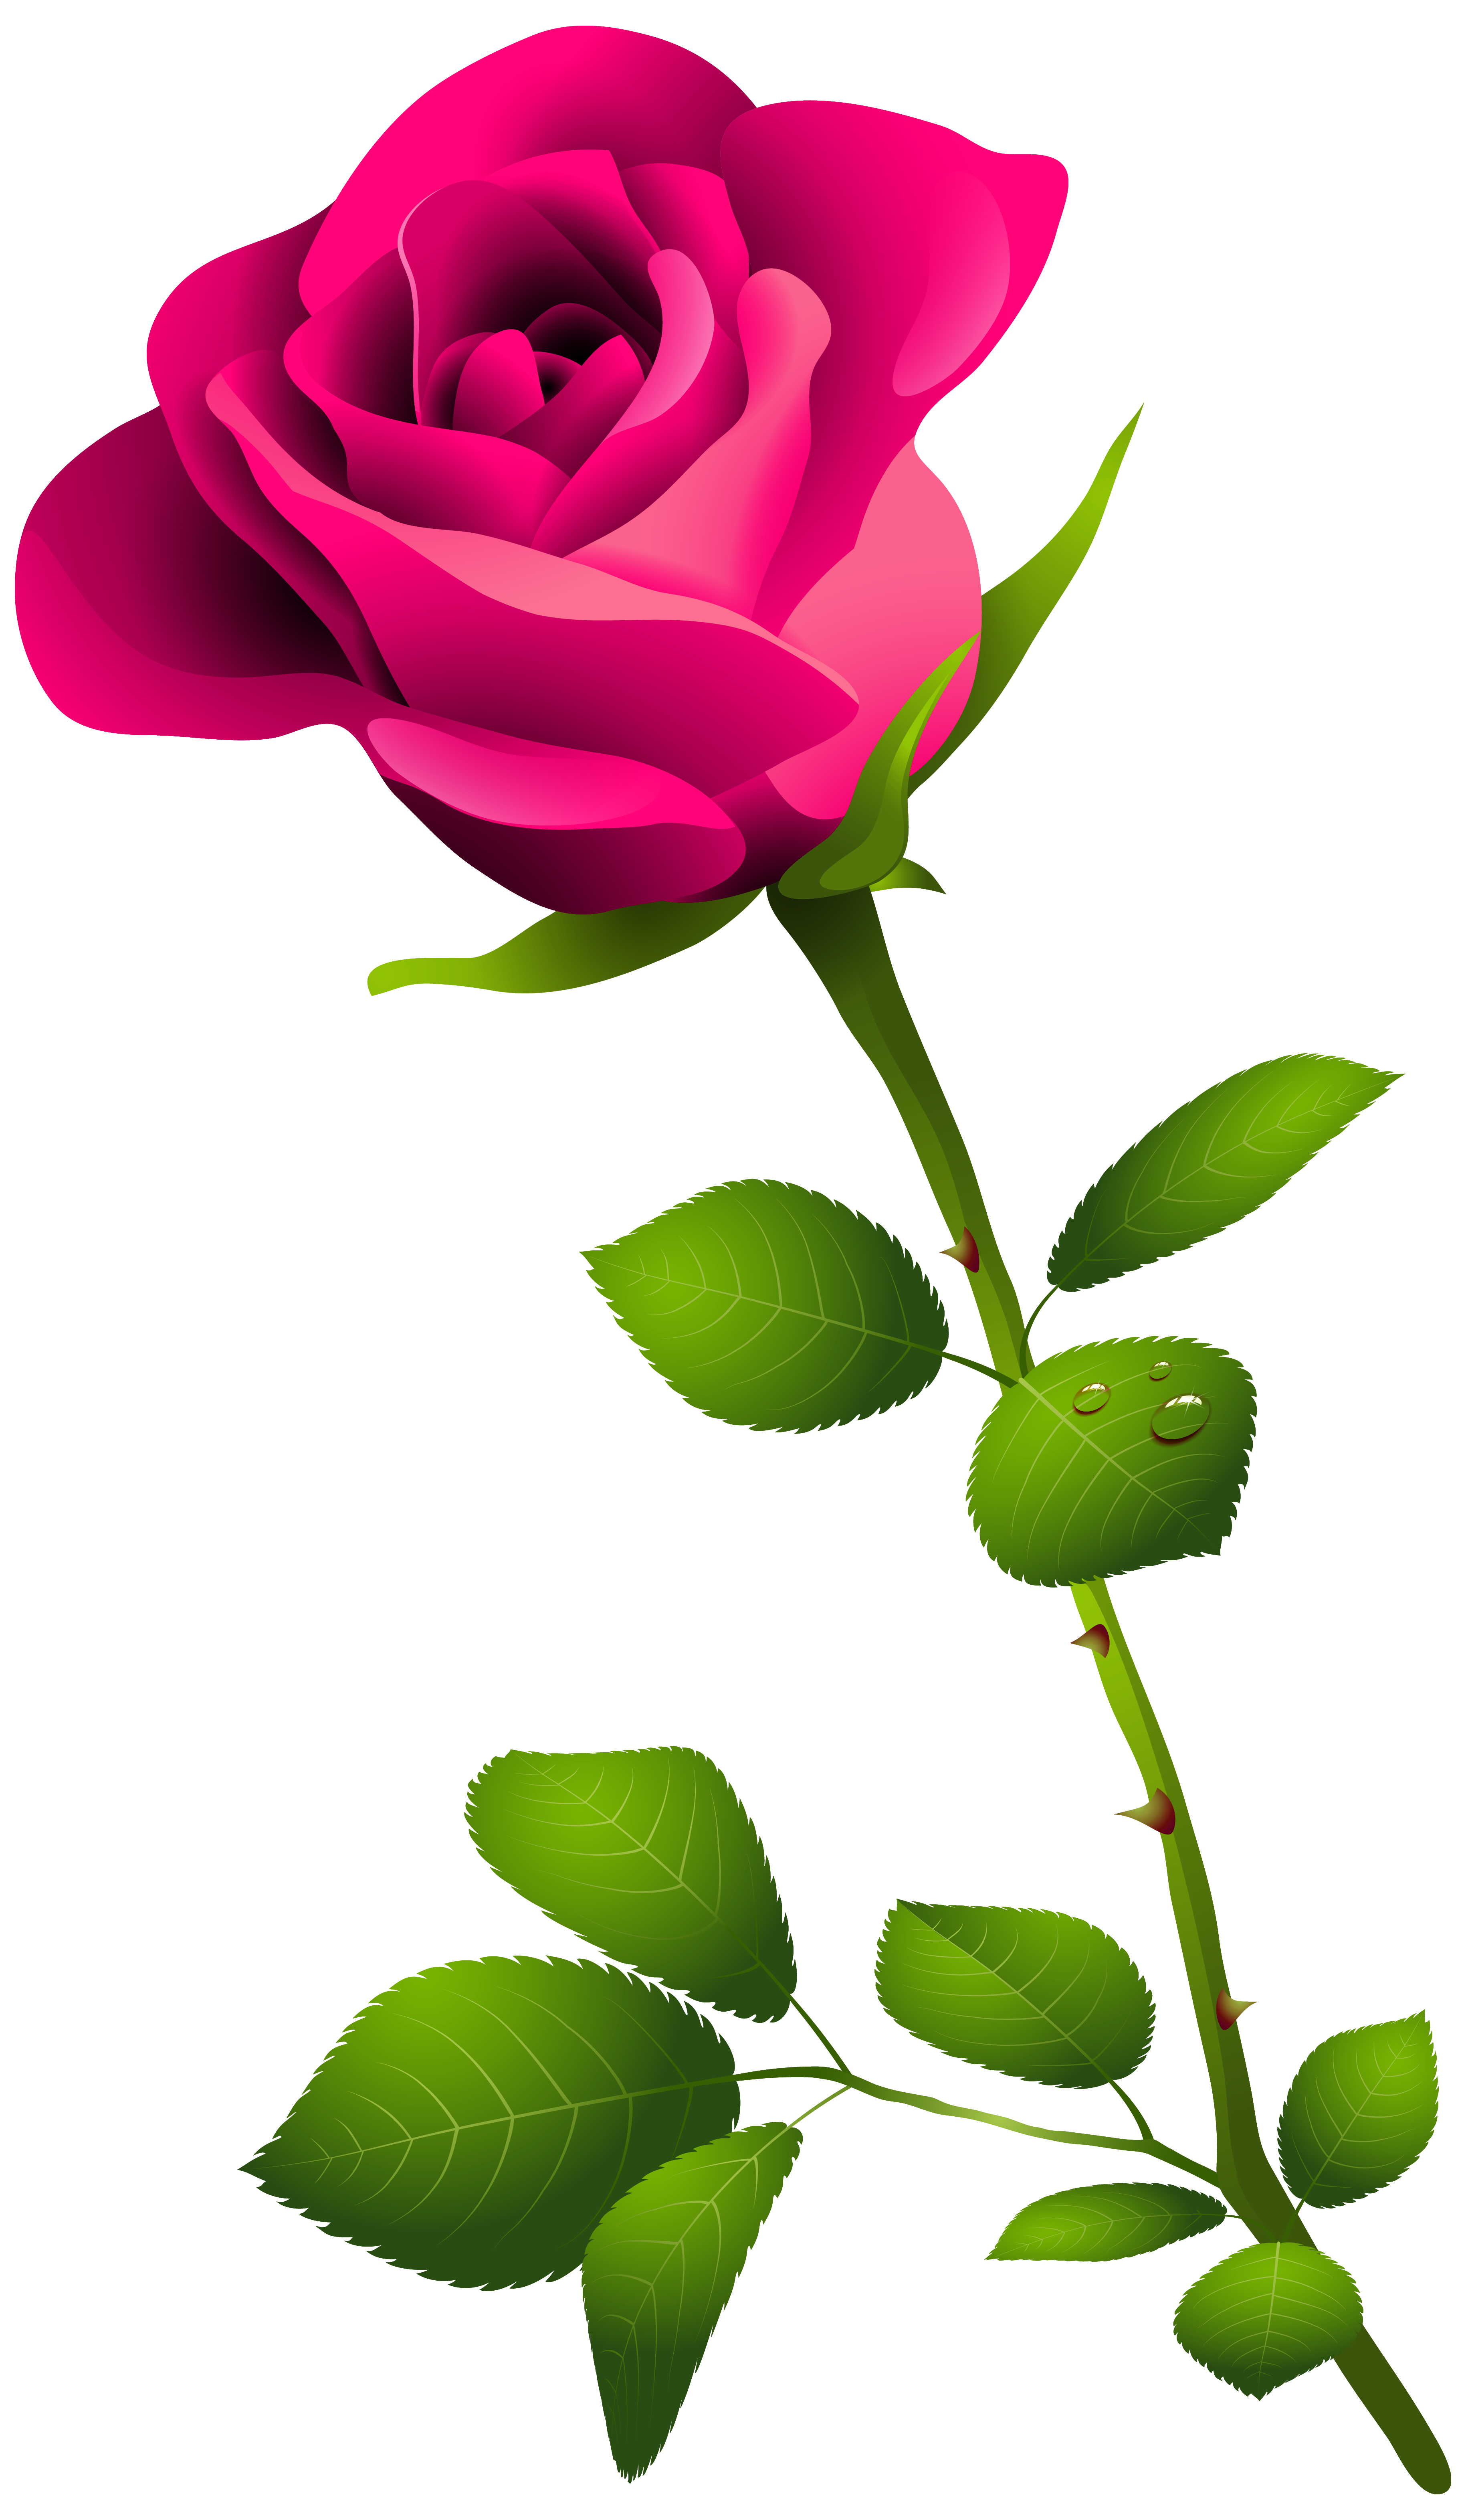 Rose clipart rose petal. Pink flower clip art